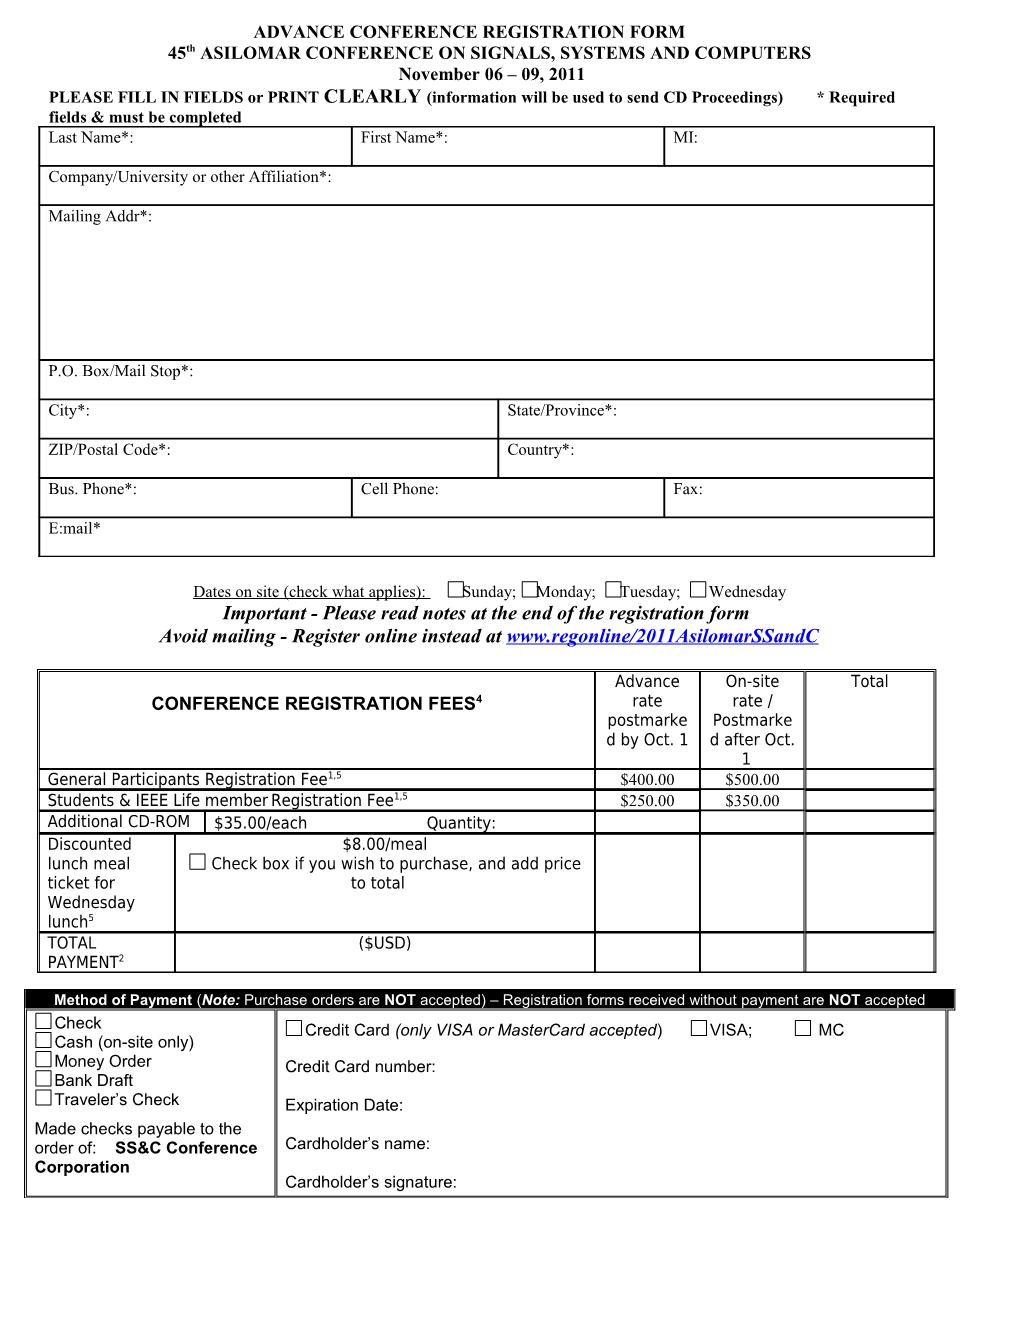 Advanced Conference Registration Form